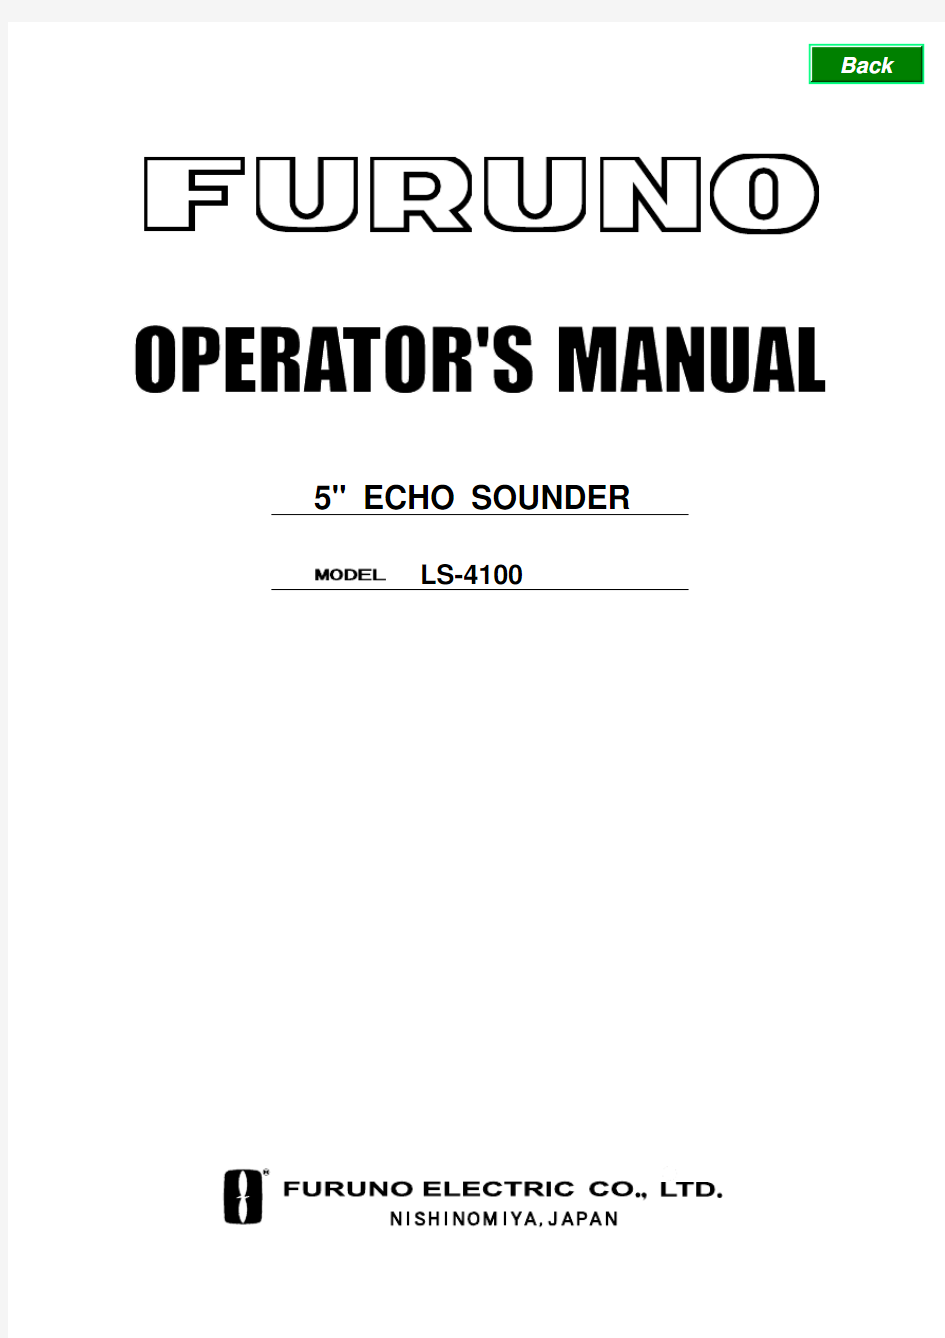 古野测深仪说明书 FURUNO LS4100 Operator's Manual(echo sounder)